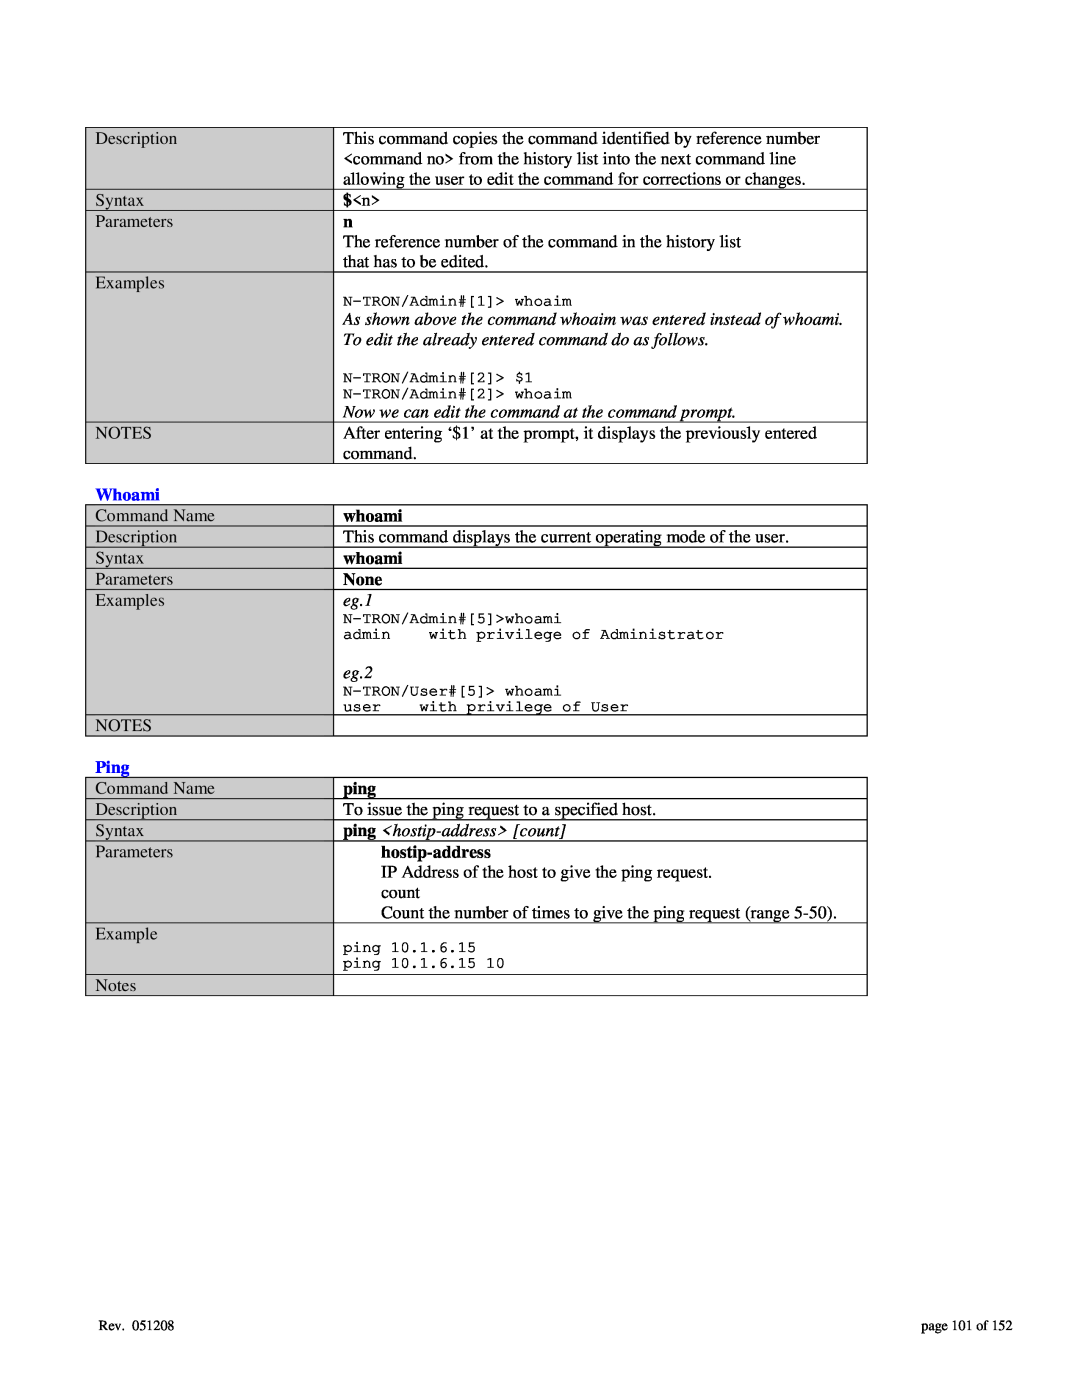 Gigabyte 7014 user manual As shown above the command whoaim was entered instead of whoami, Whoami, eg.1, eg.2, Ping 